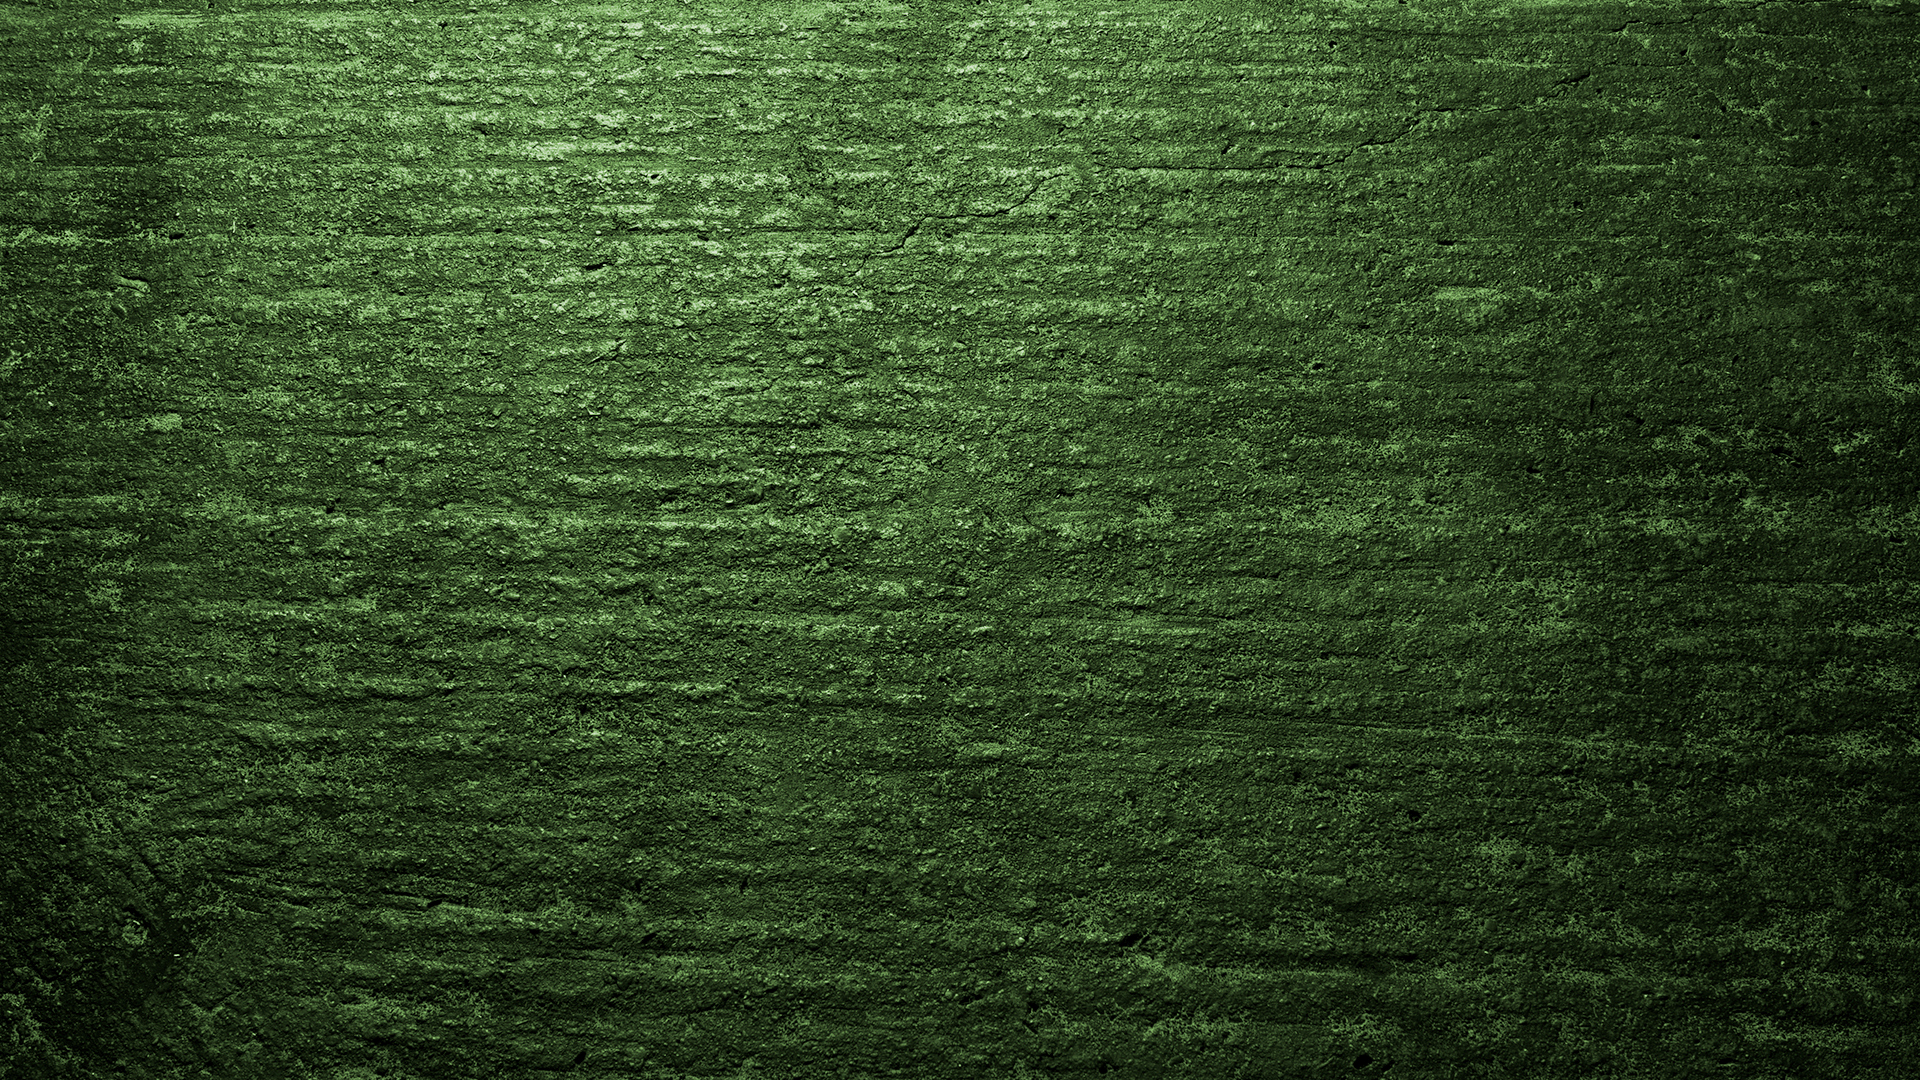 Green Vintage Grunge Concrete Texture Hd 1920 X 1080p - Eminem Quote Donald Trump - HD Wallpaper 